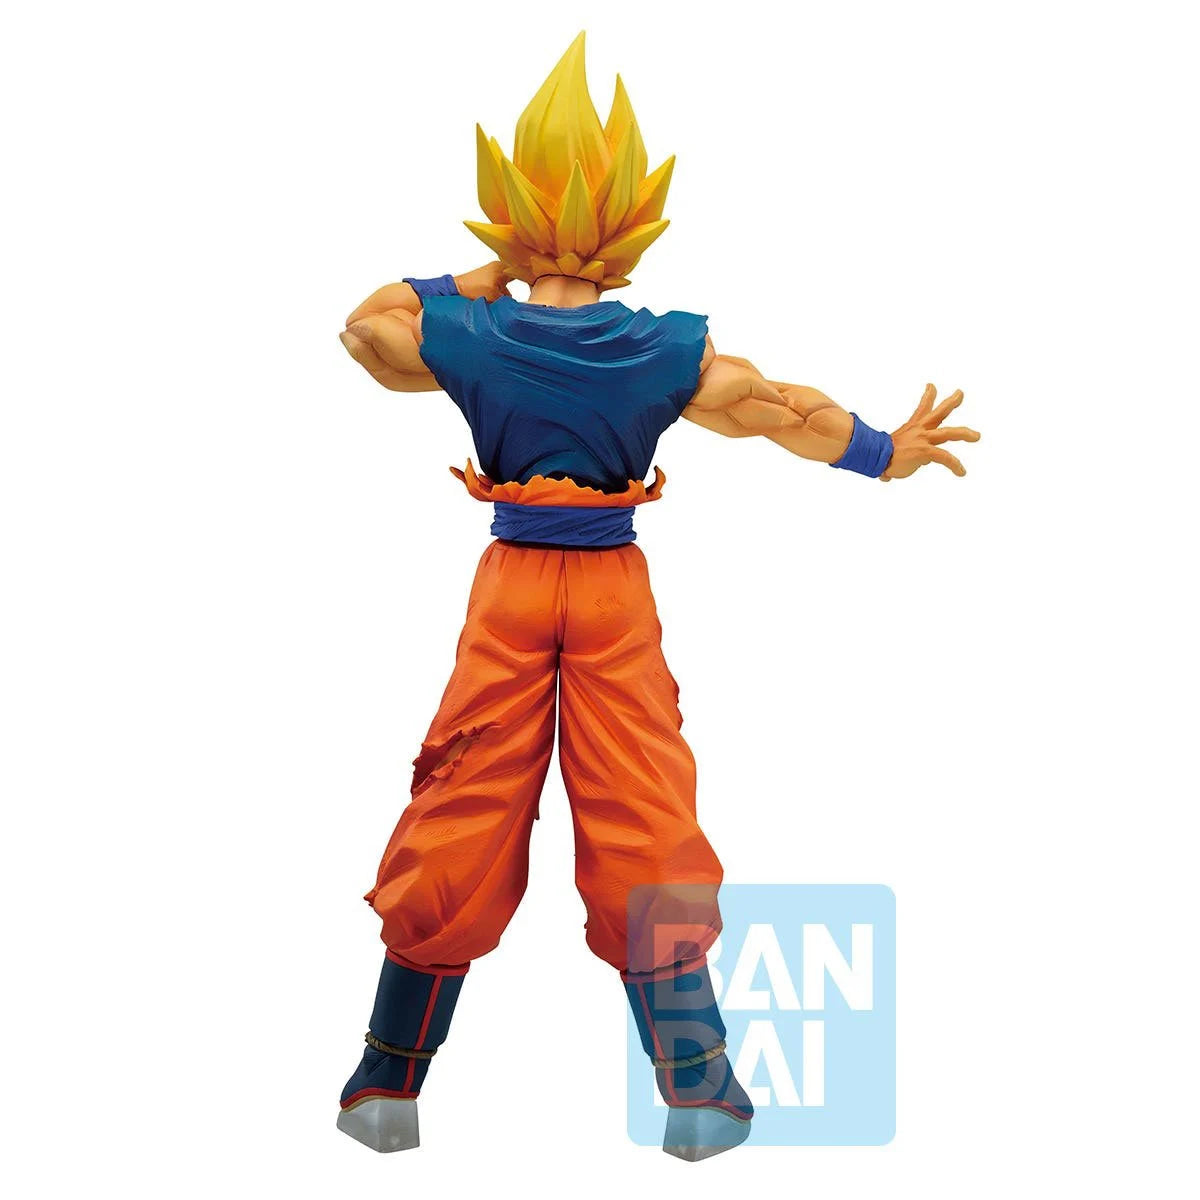 DBZ Son Goku Crash! Battle For The Universe Ichiban Statue by Bandai -Tamashii Nations - India - www.superherotoystore.com